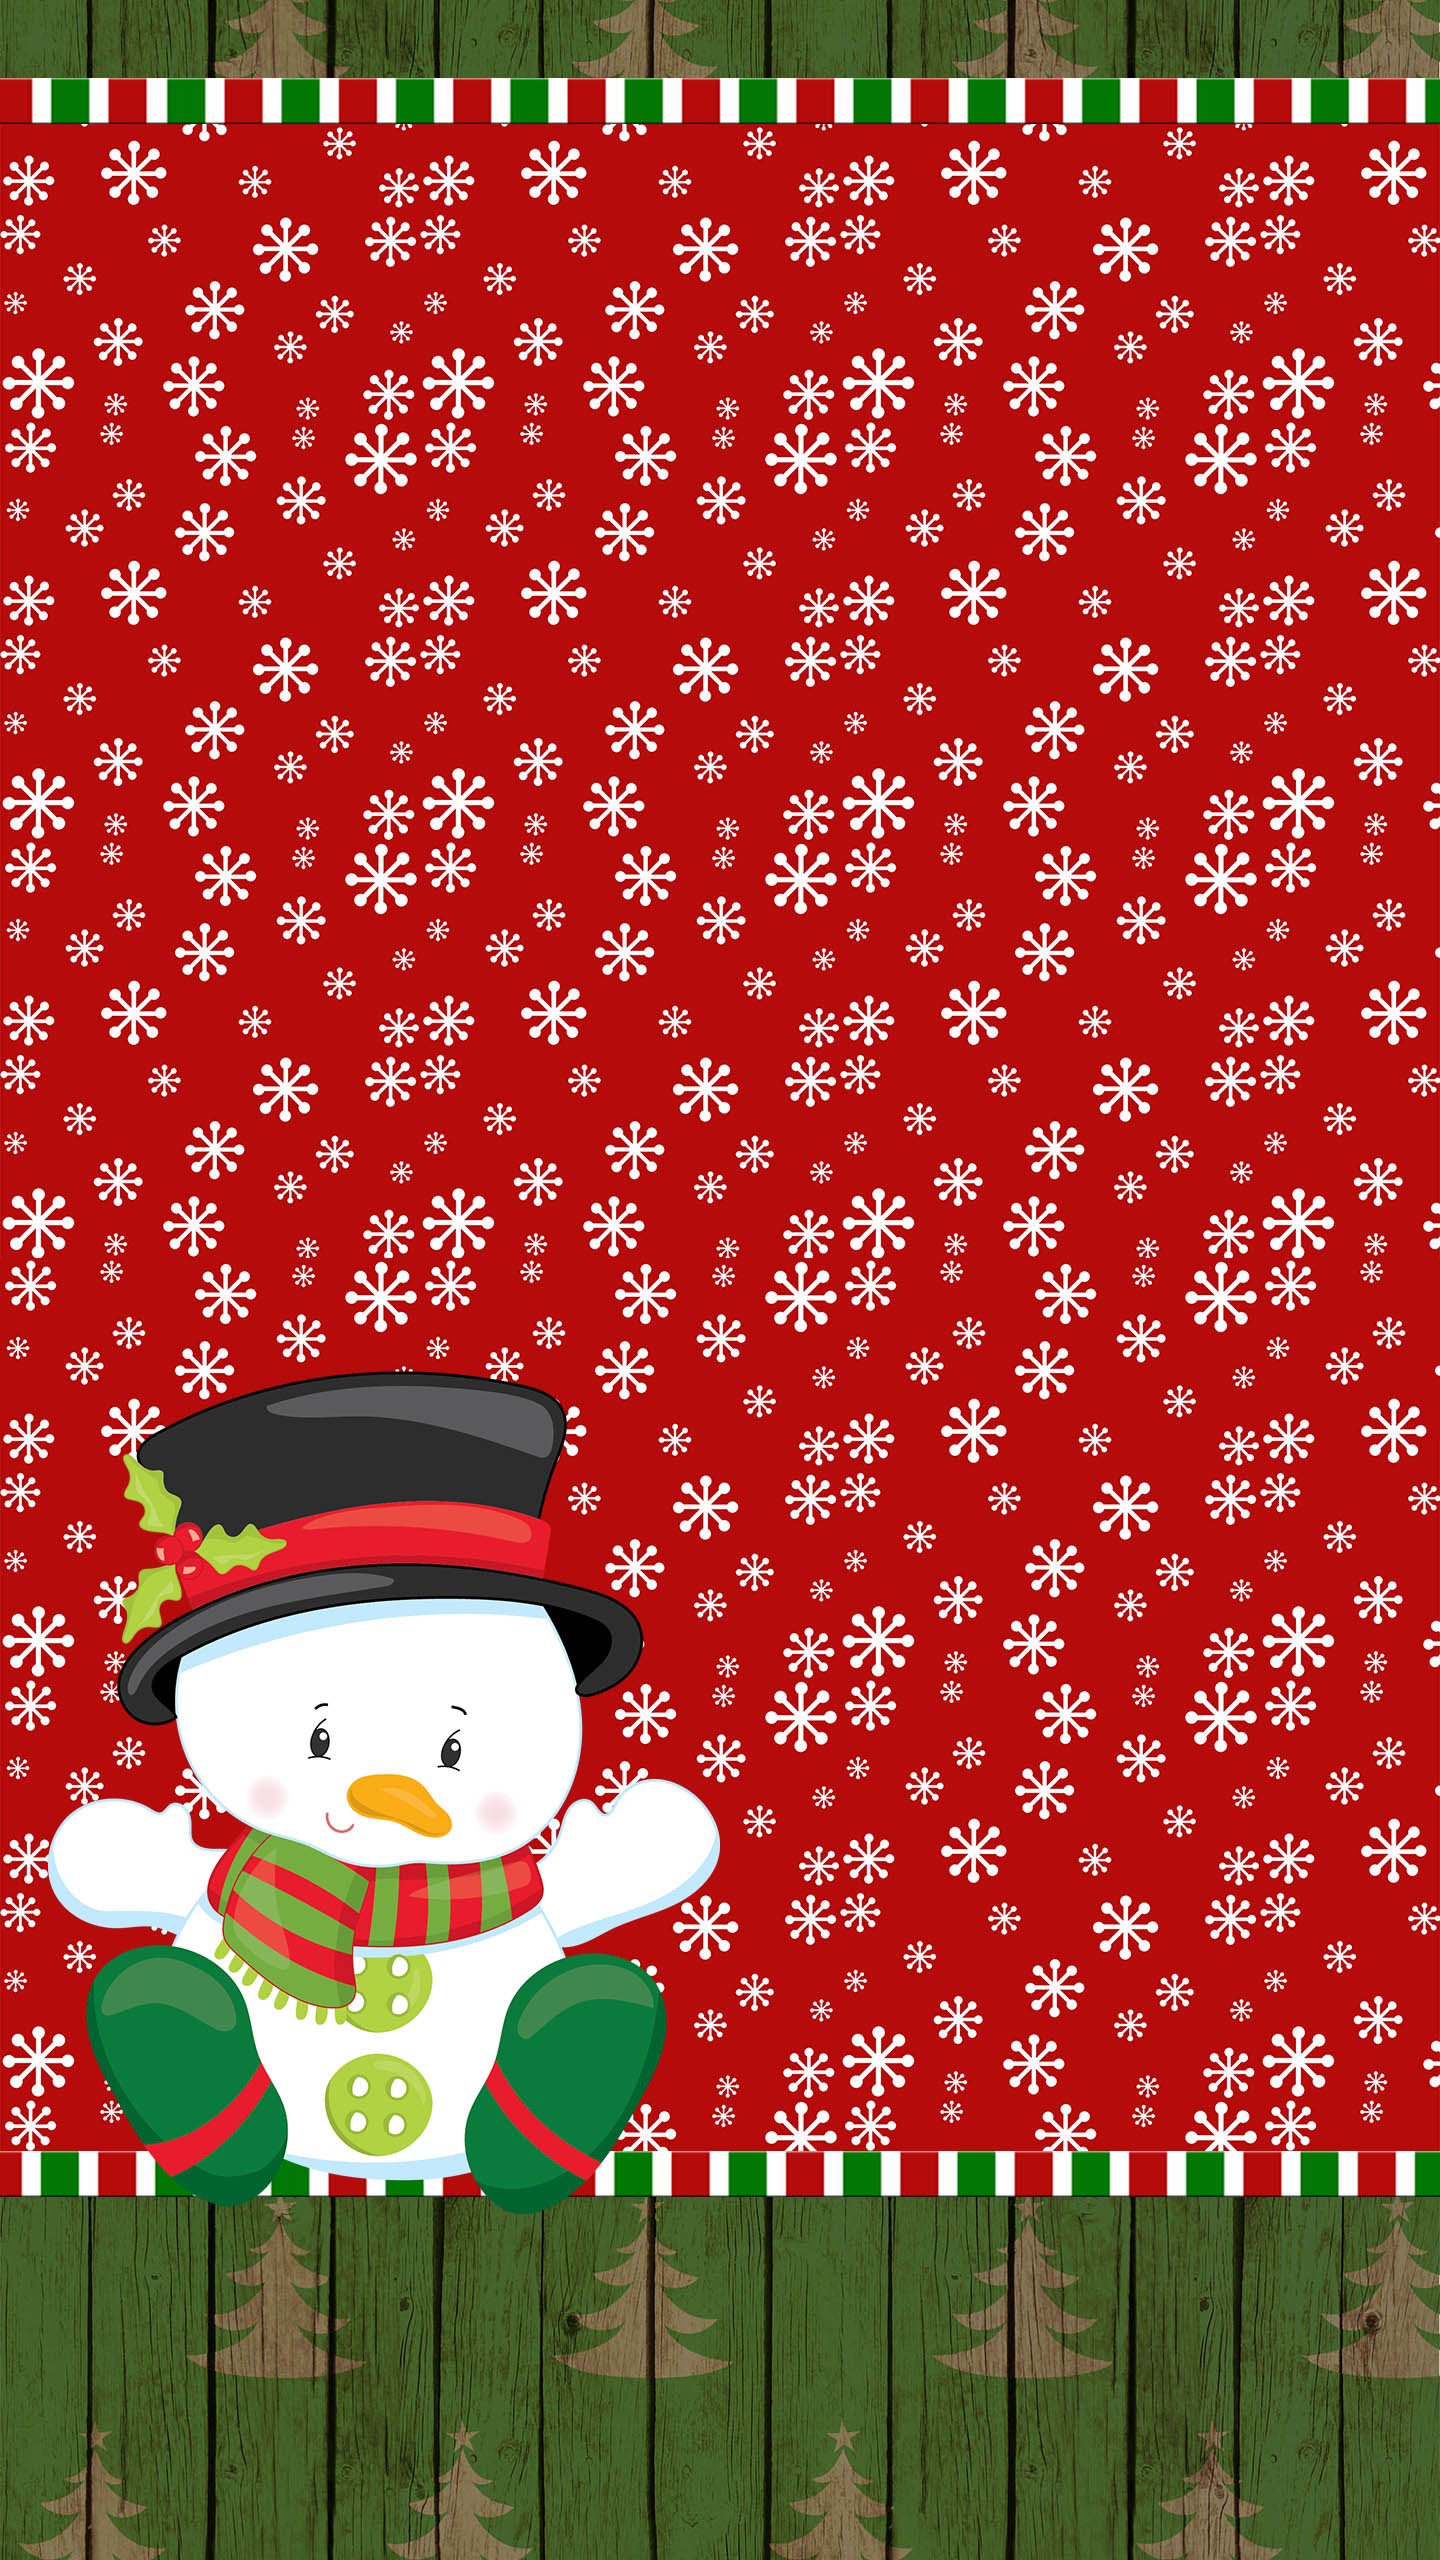 Christmas phone wallpaper ·① Download free beautiful wallpapers for desktop, mobile, laptop in ...